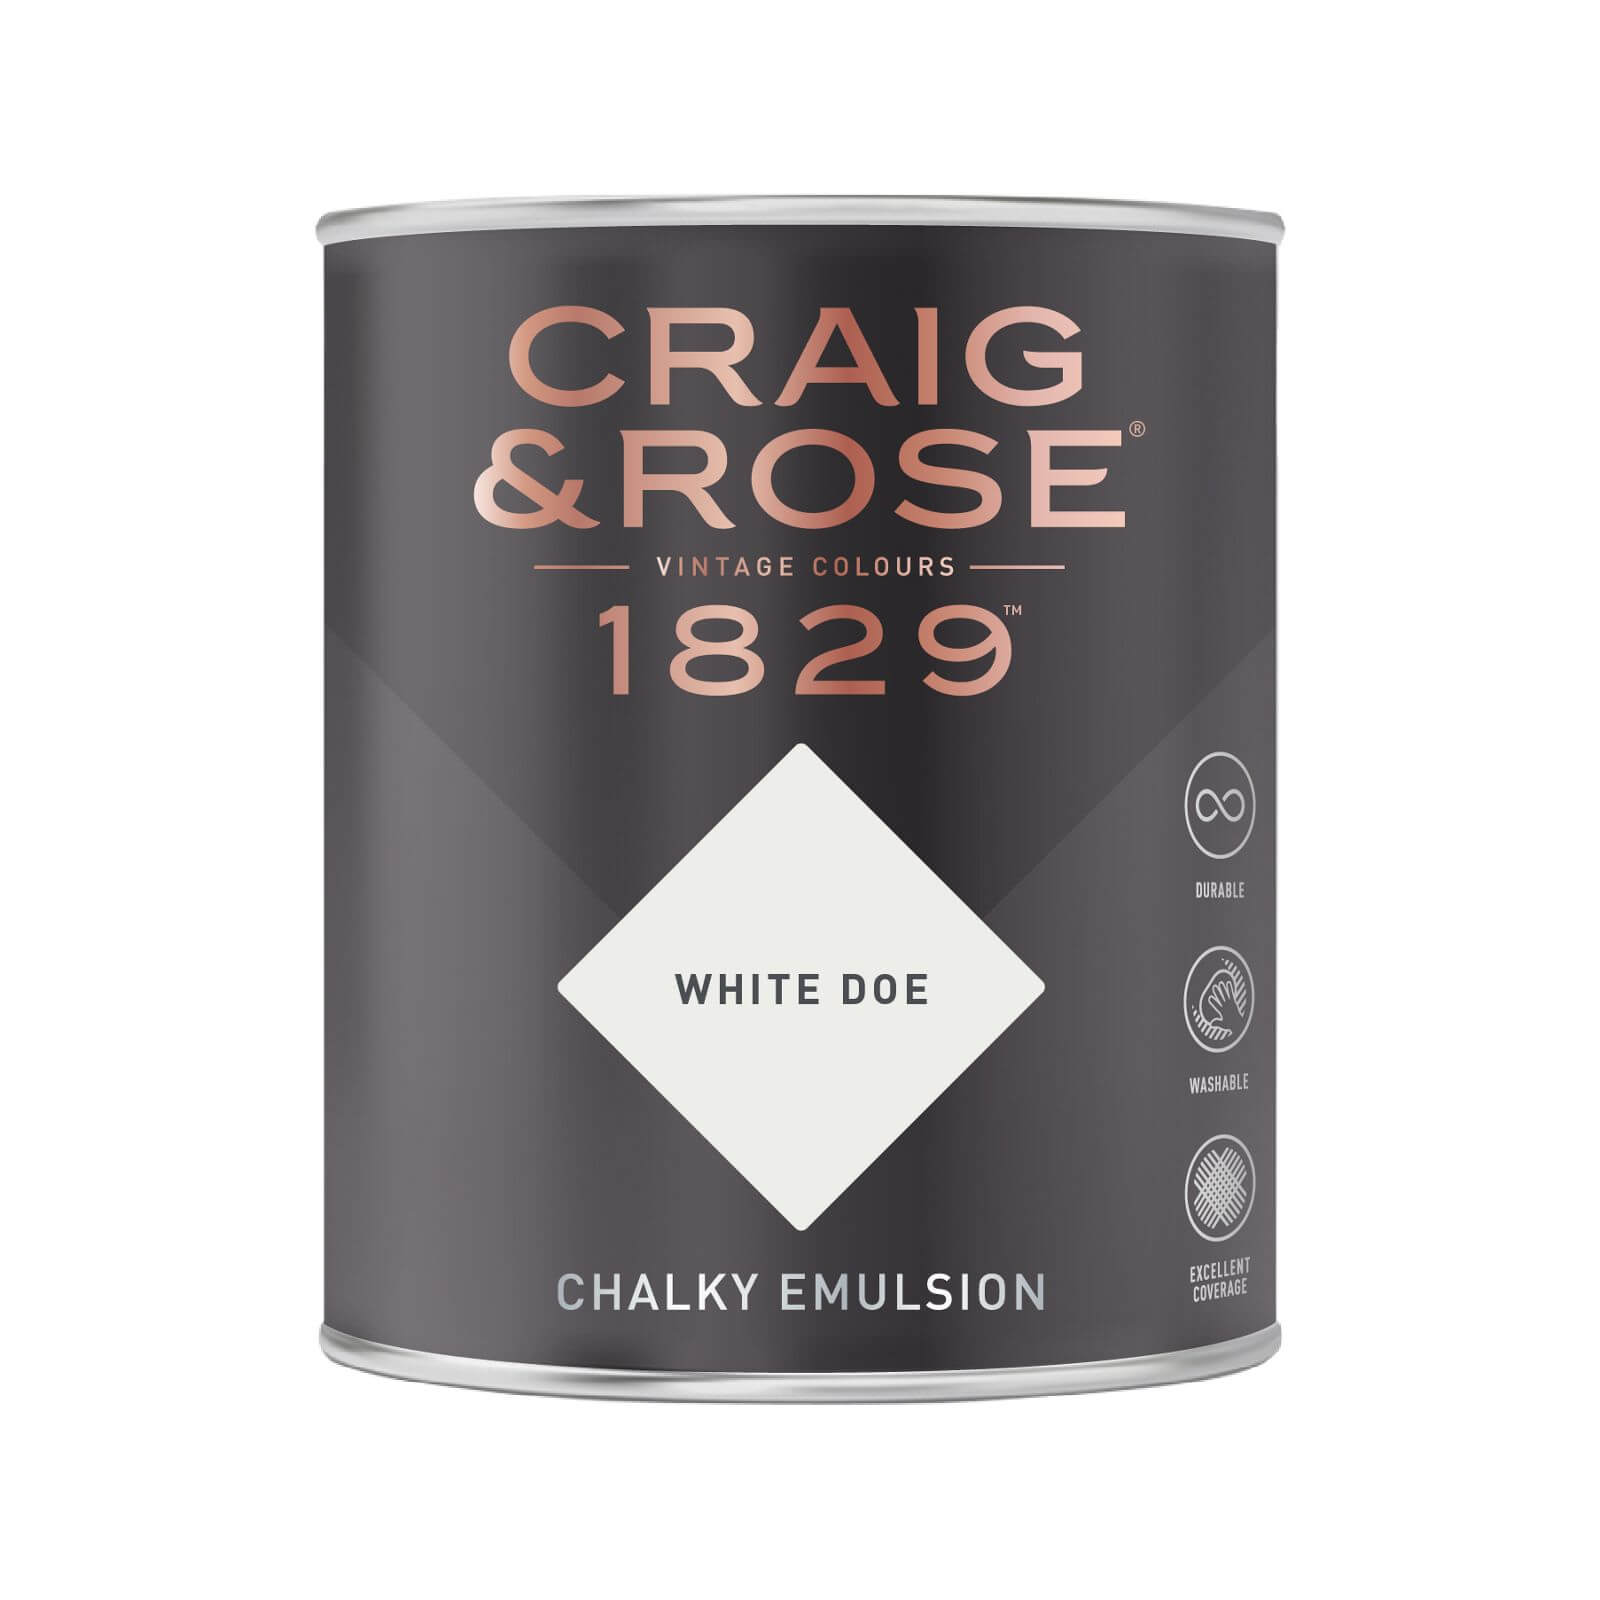 Craig & Rose 1829 Chalky Emulsion Paint White Doe - 750ml